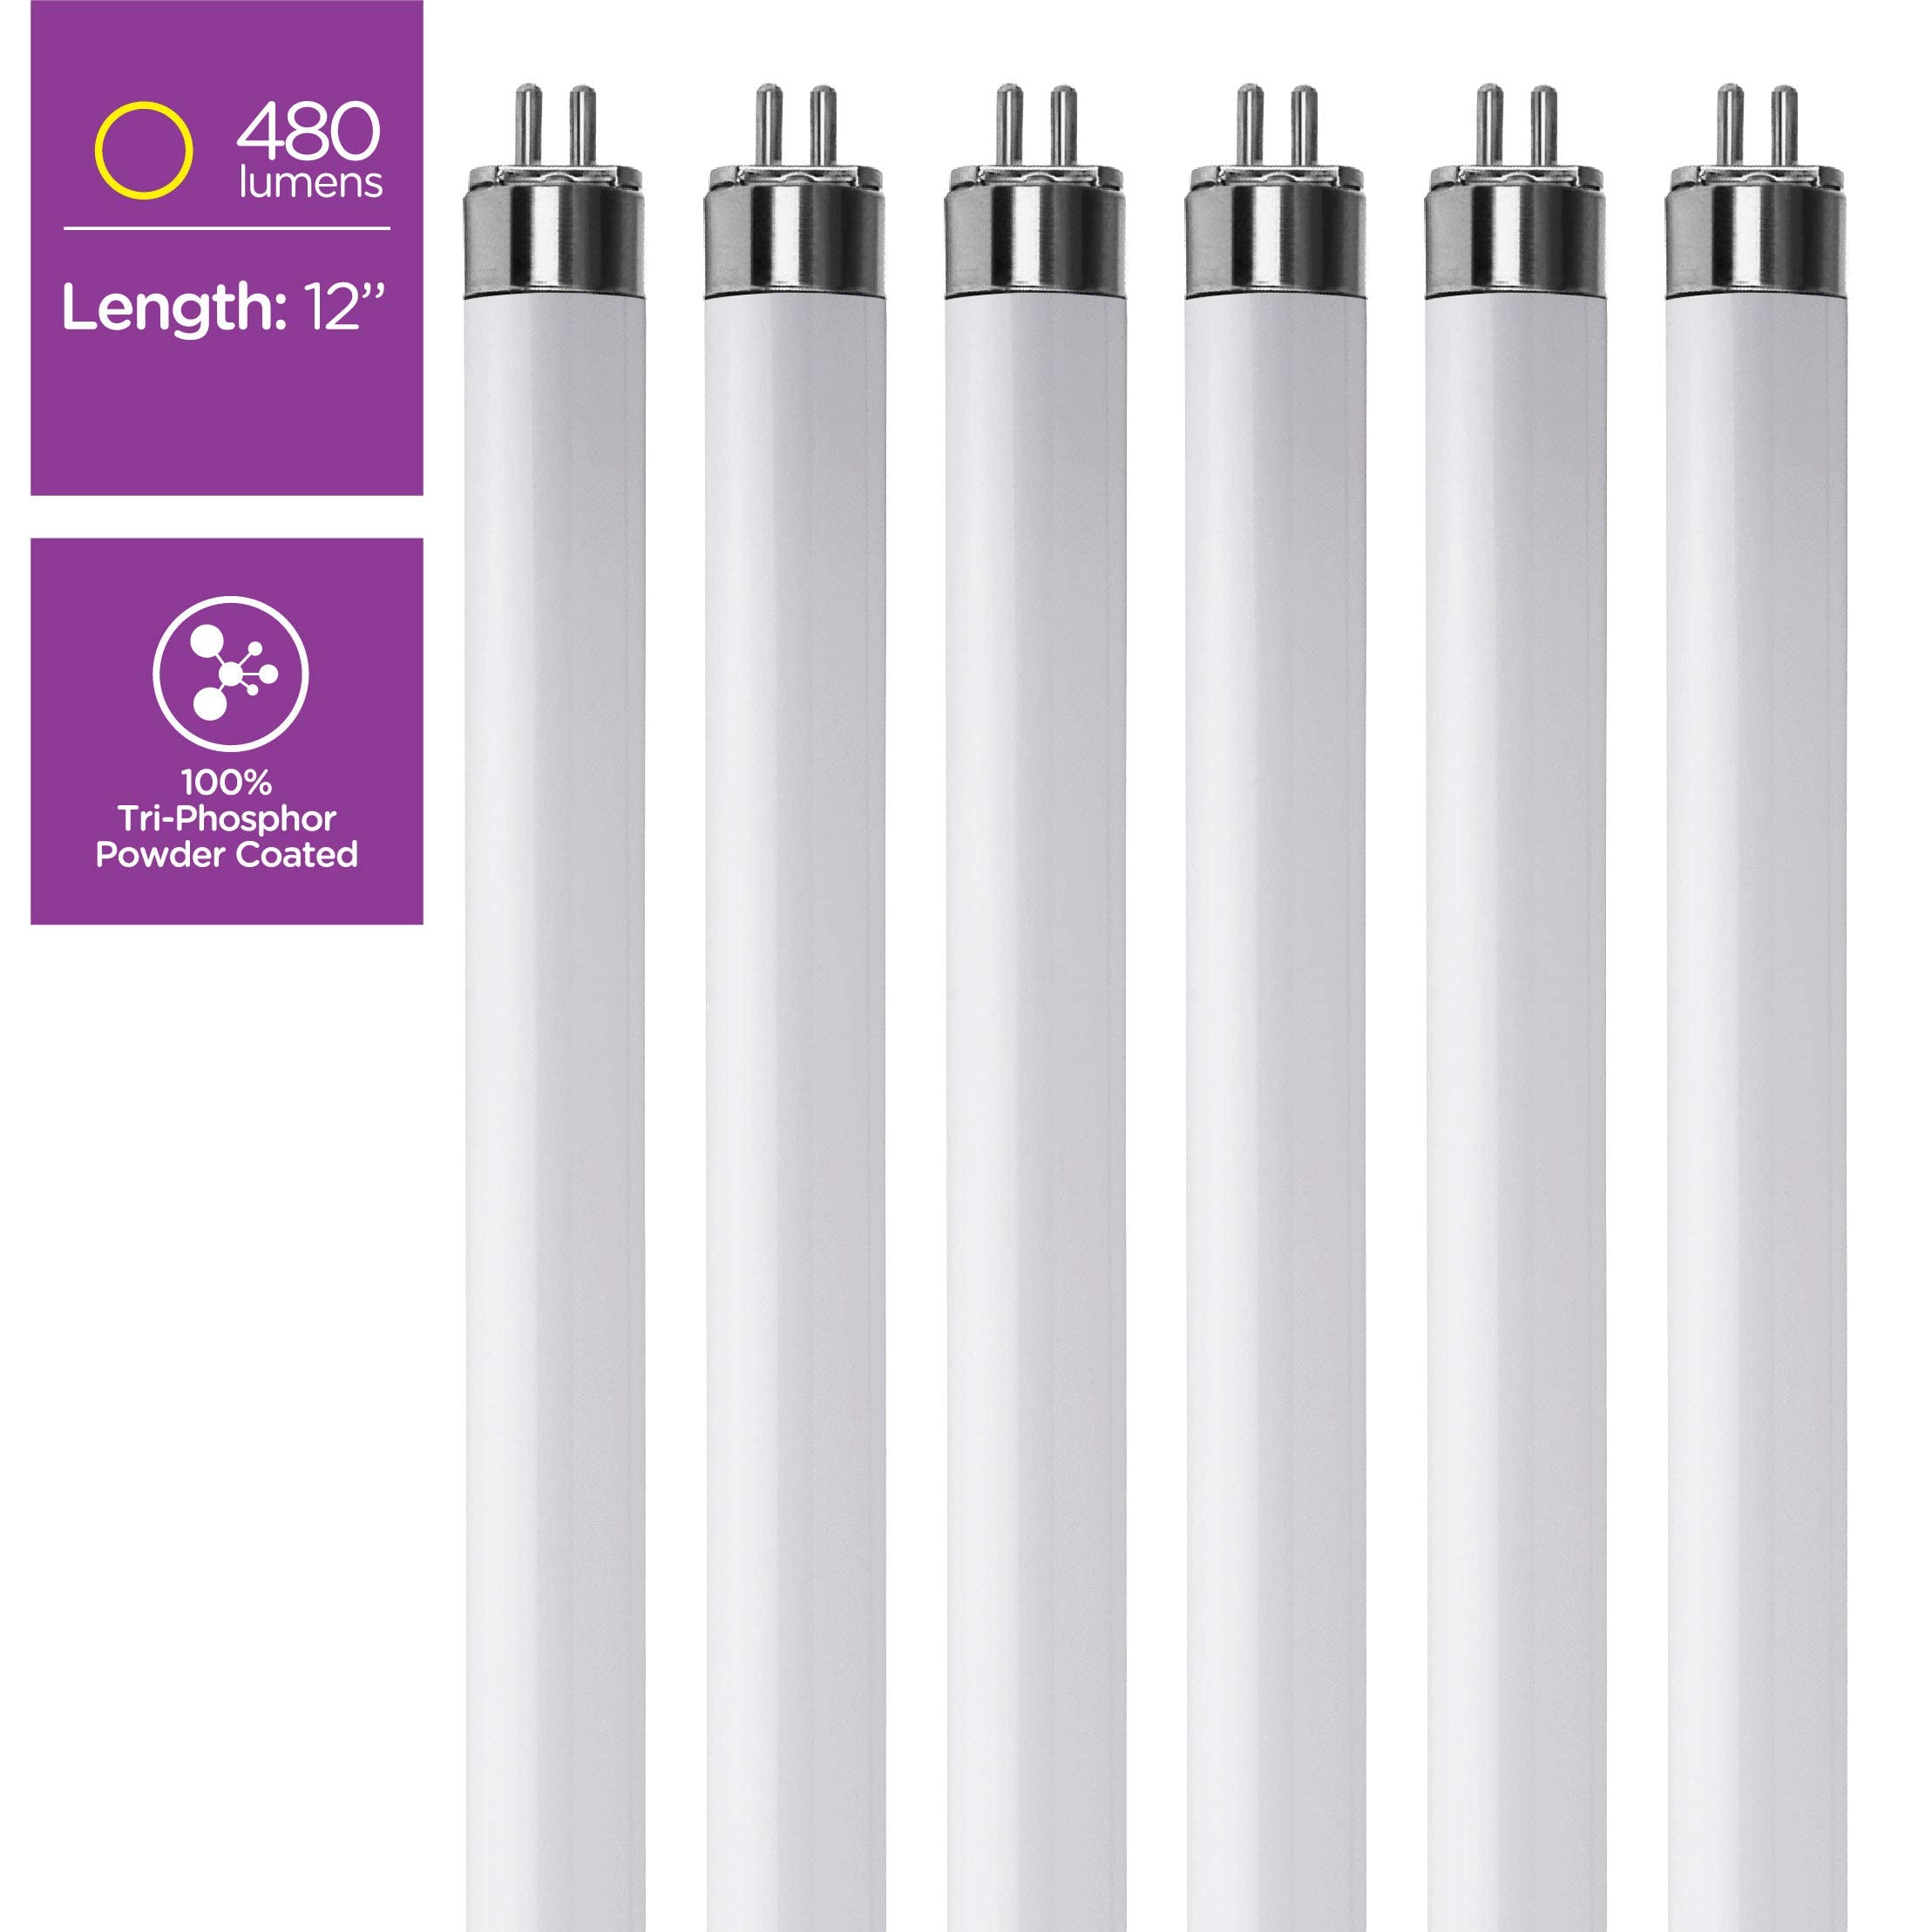 KOR (Pack of 6) F8T5/WW - T5 Fluorescent 3000K Warm White - 8 Watt - 12" Super Long Life Light Bulbs  - Like New